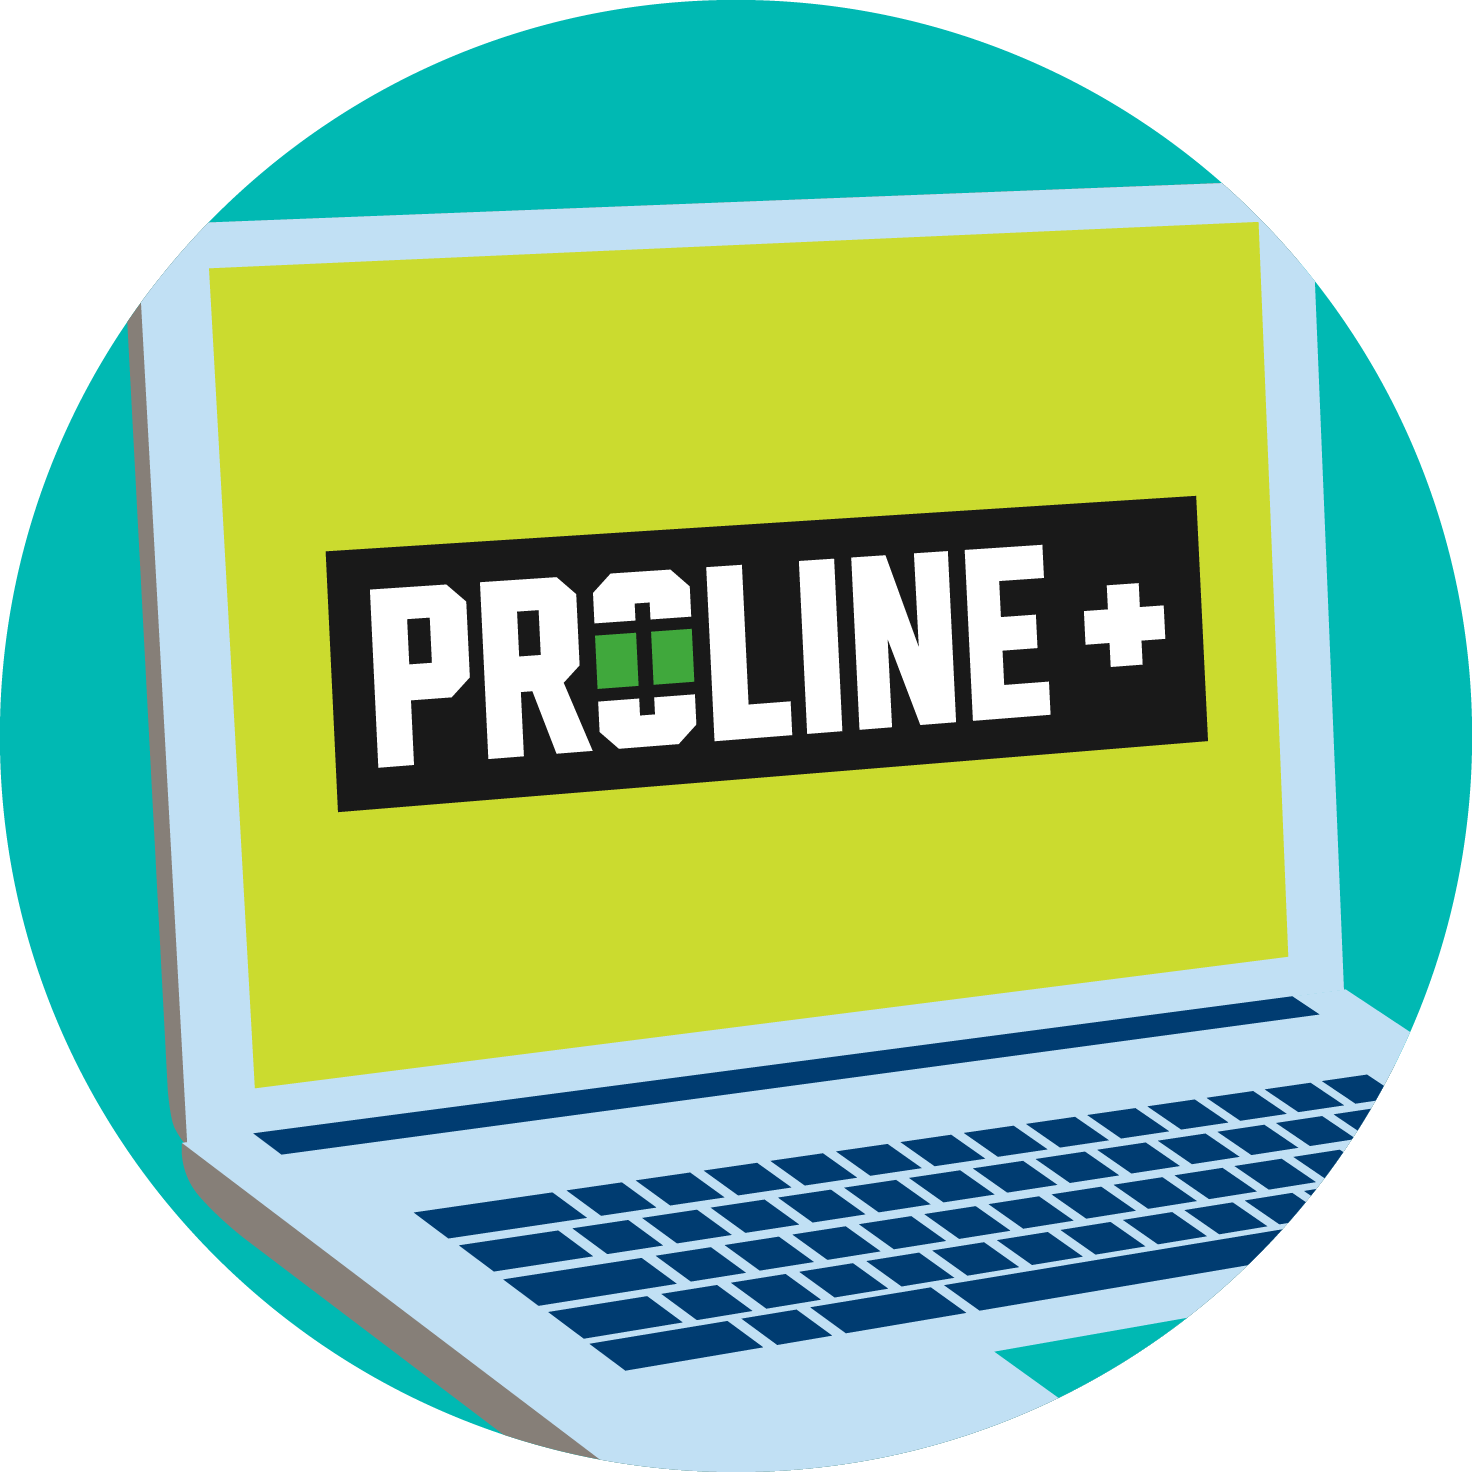 A laptop screen displays the PROLINE+ logo